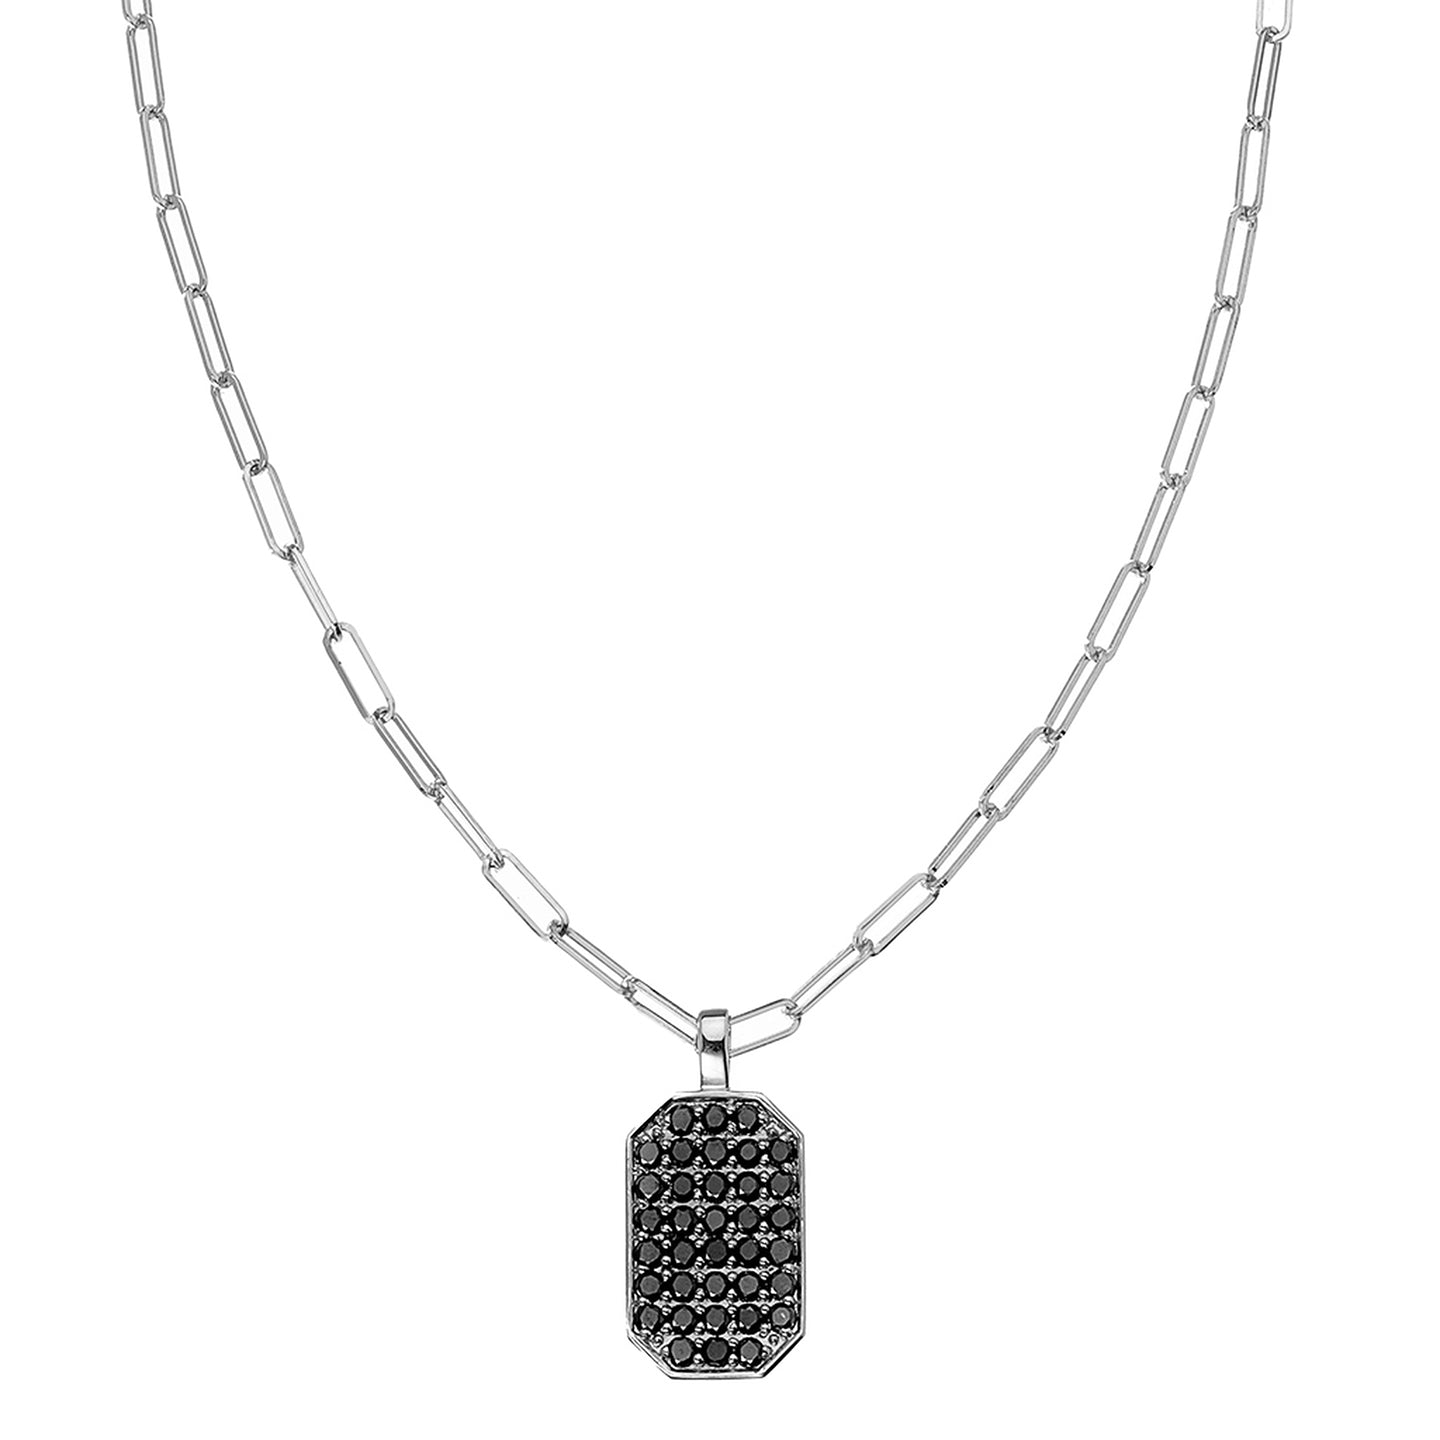 P.S. Large Black Diamond White Gold Tag Necklace